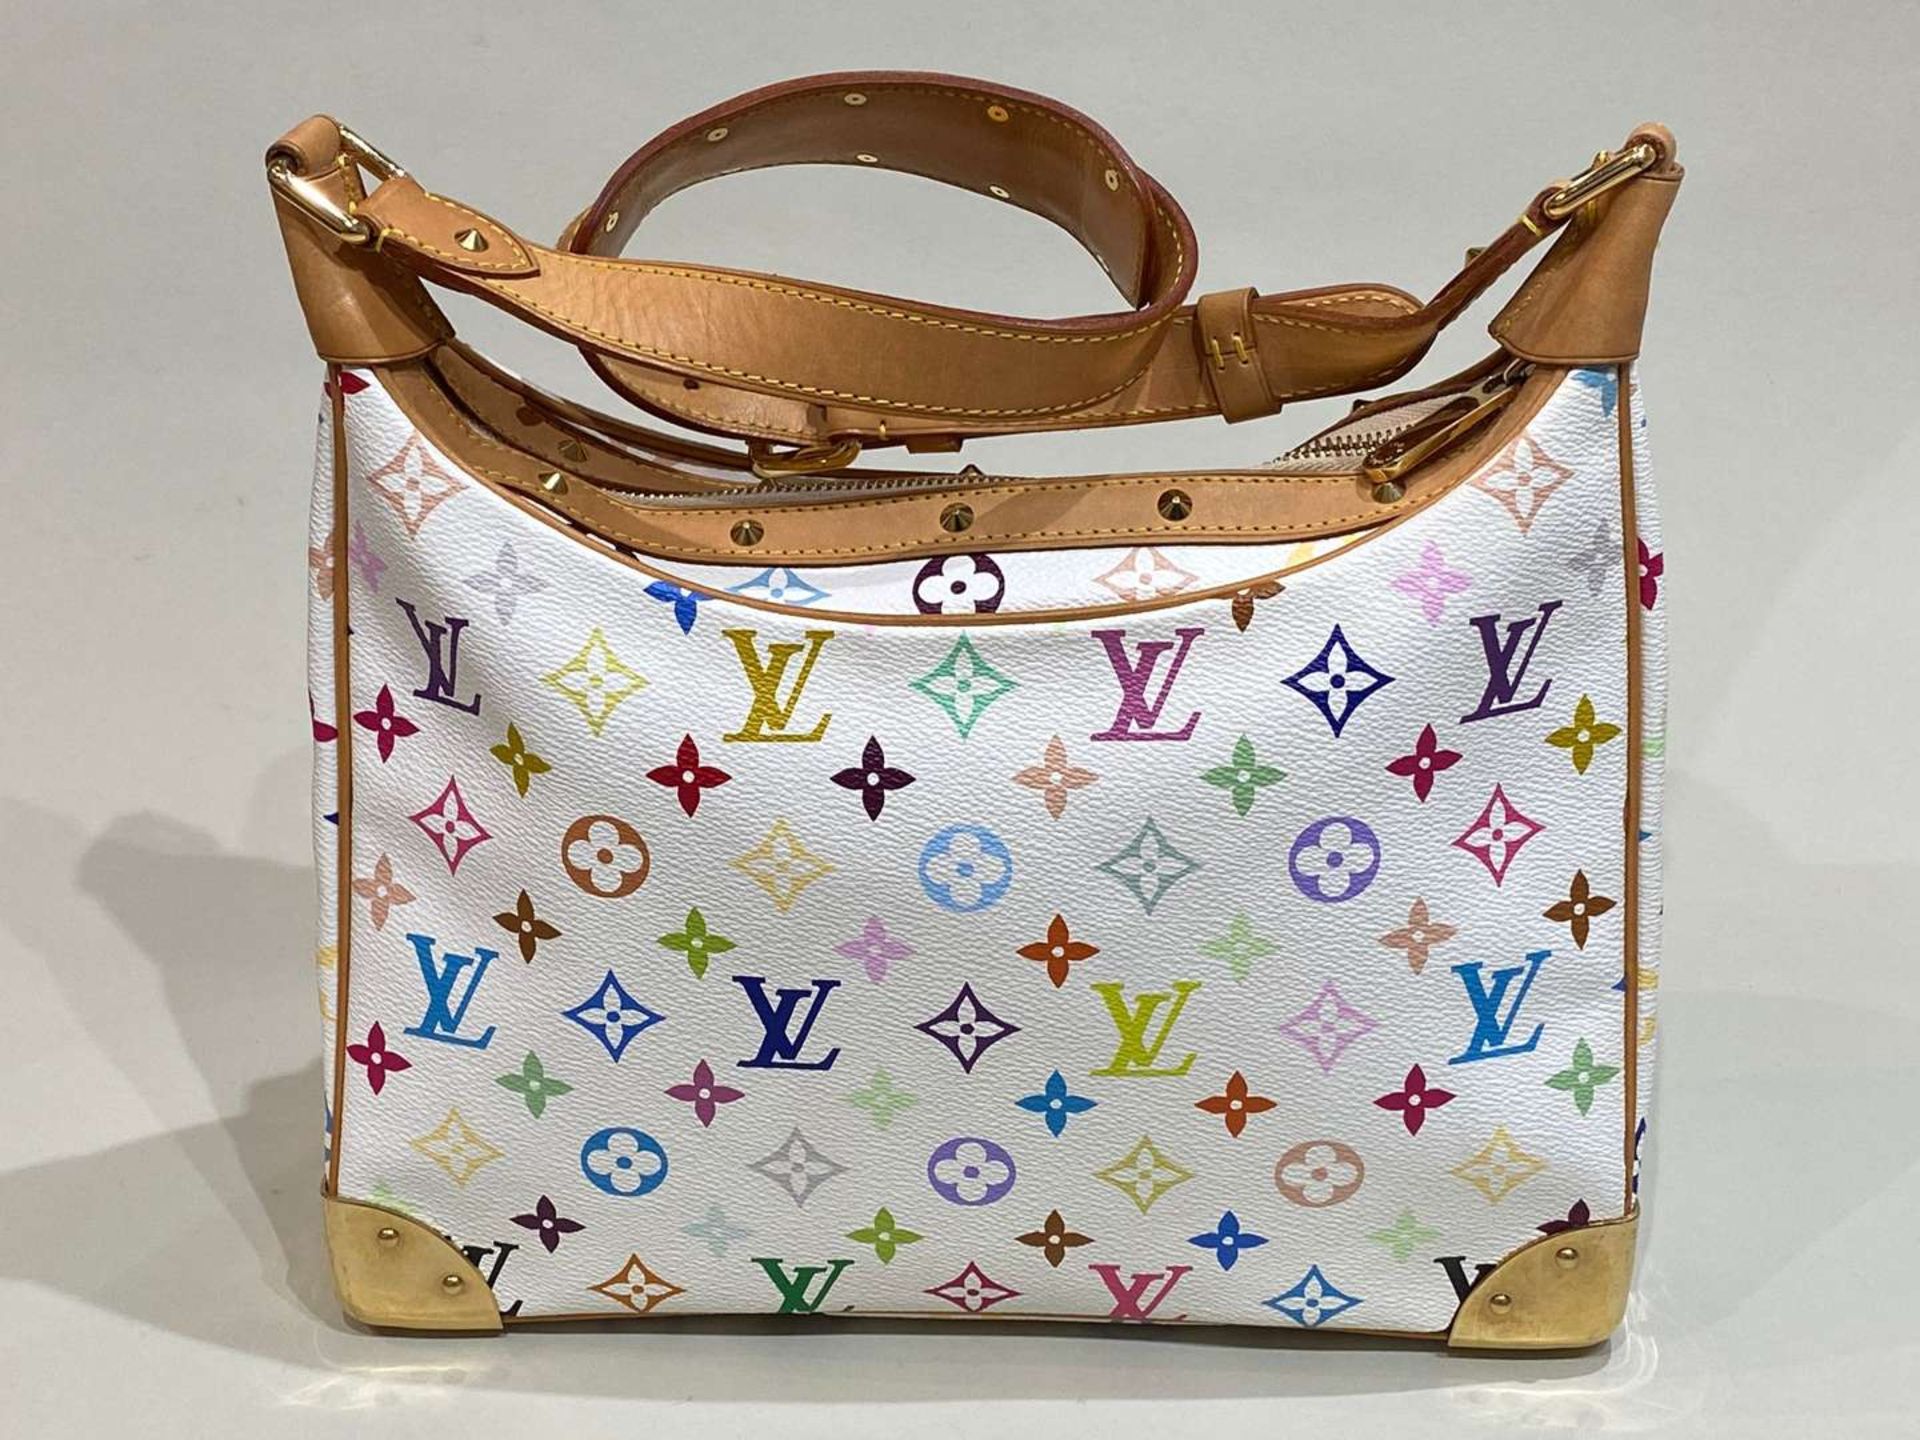 LOUIS VUITTON, Boulogne, leather, multicolour monogrammed, crossbody bag, Le Takashi Murakami - Image 4 of 9